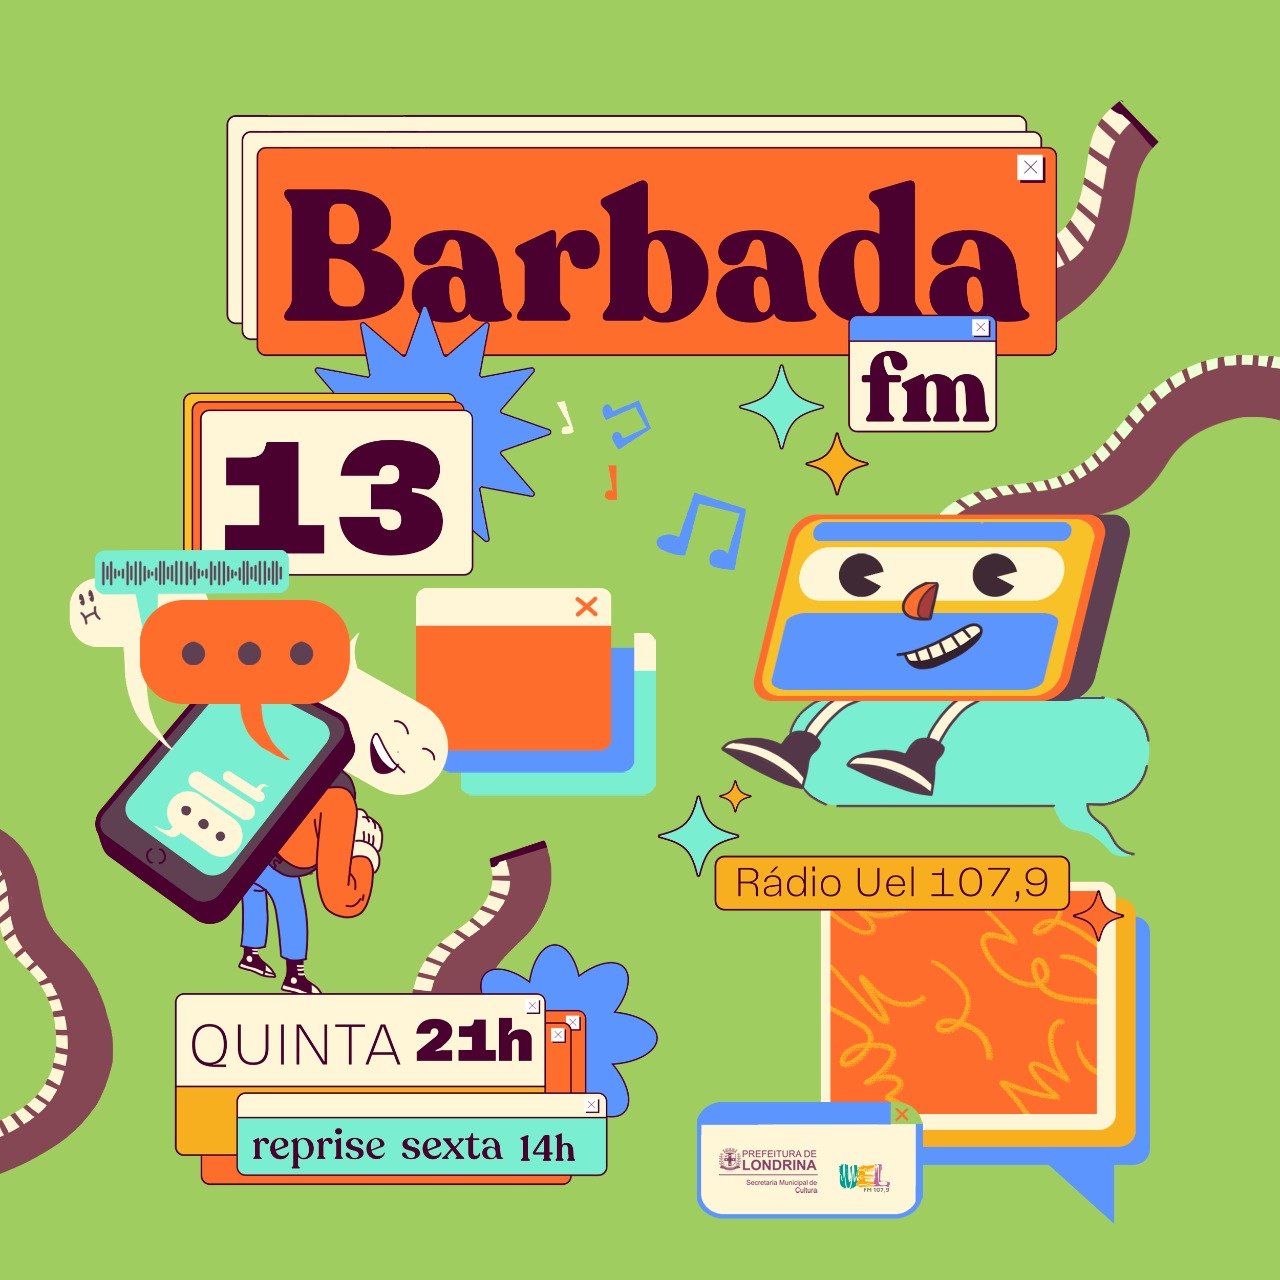 Barbada FM